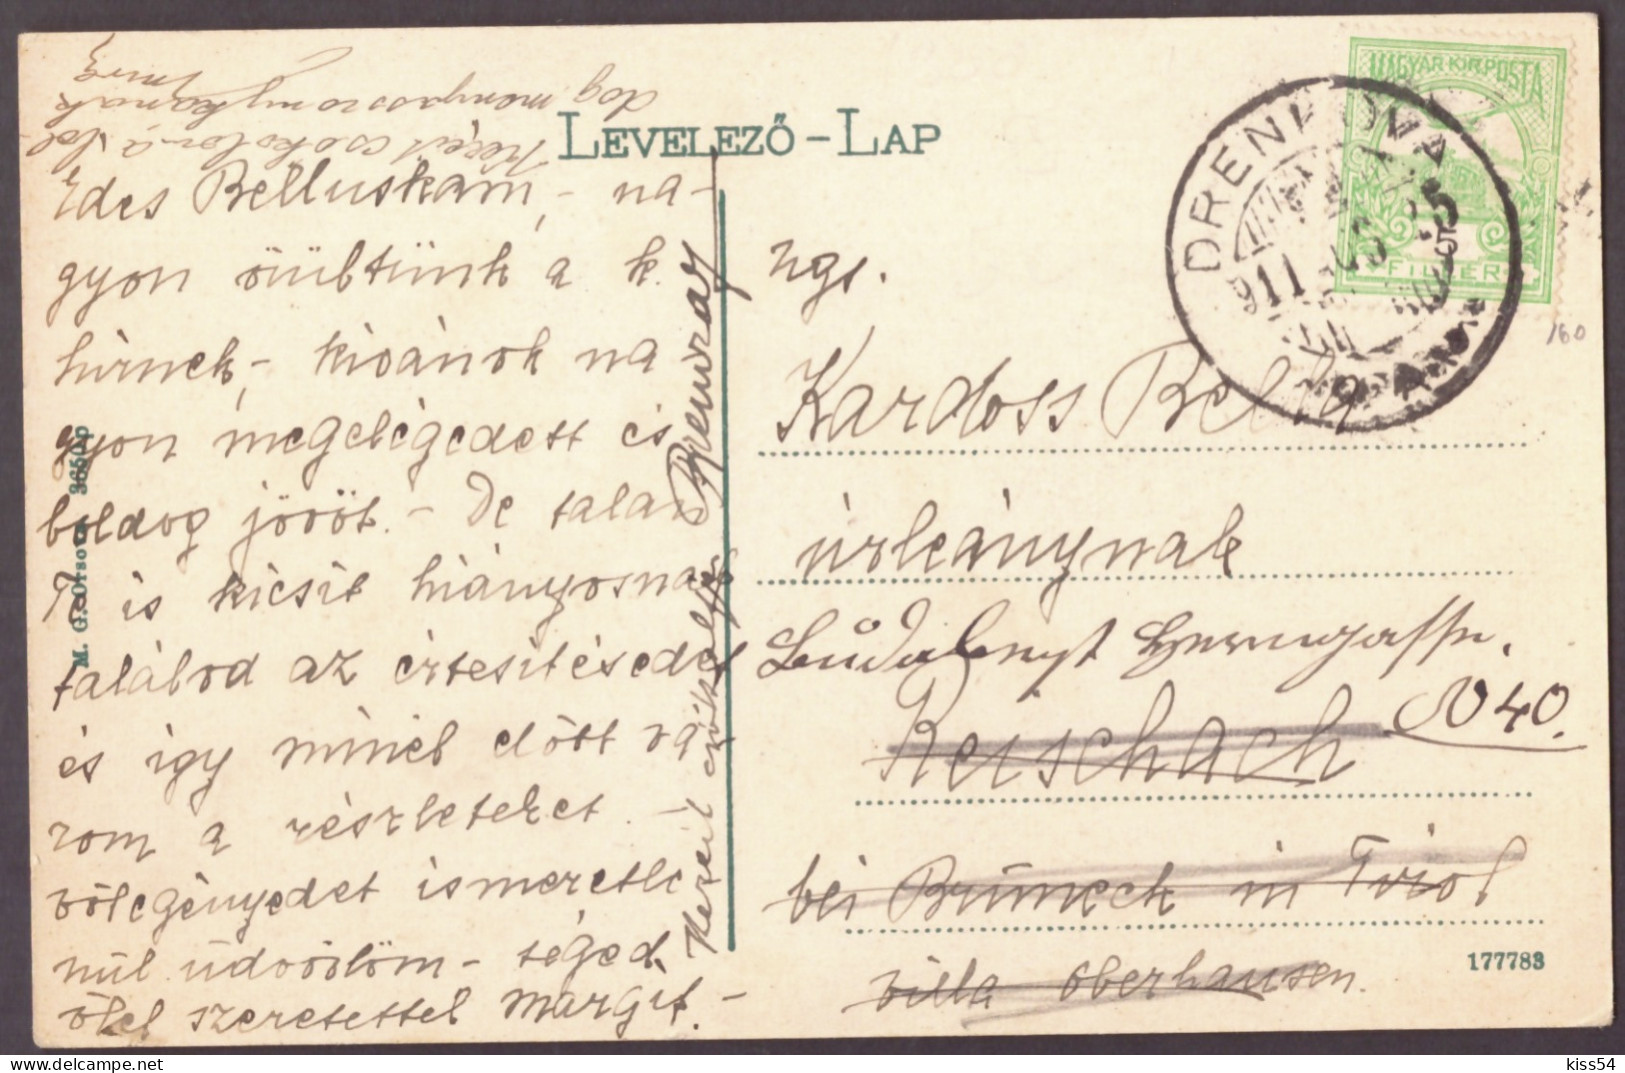 RO 38 - 24941 ORSOVA, Danube Kazan, Romania - Old Postcard - Used - 1911 - Romania